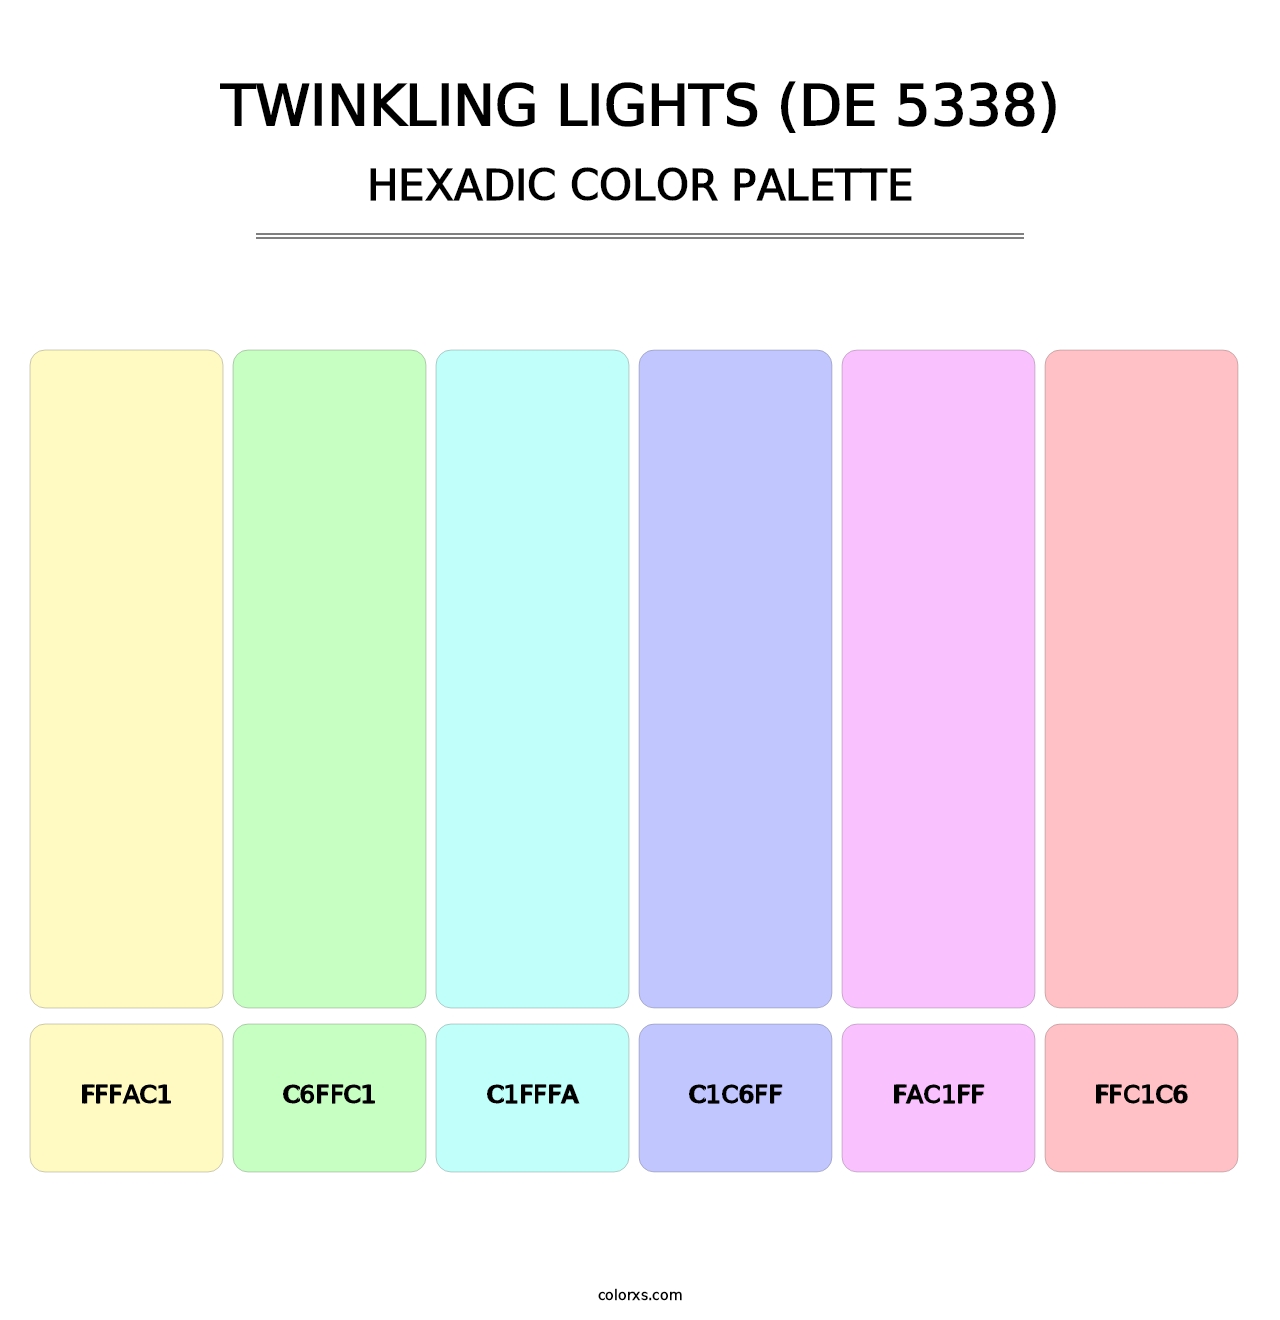 Twinkling Lights (DE 5338) - Hexadic Color Palette